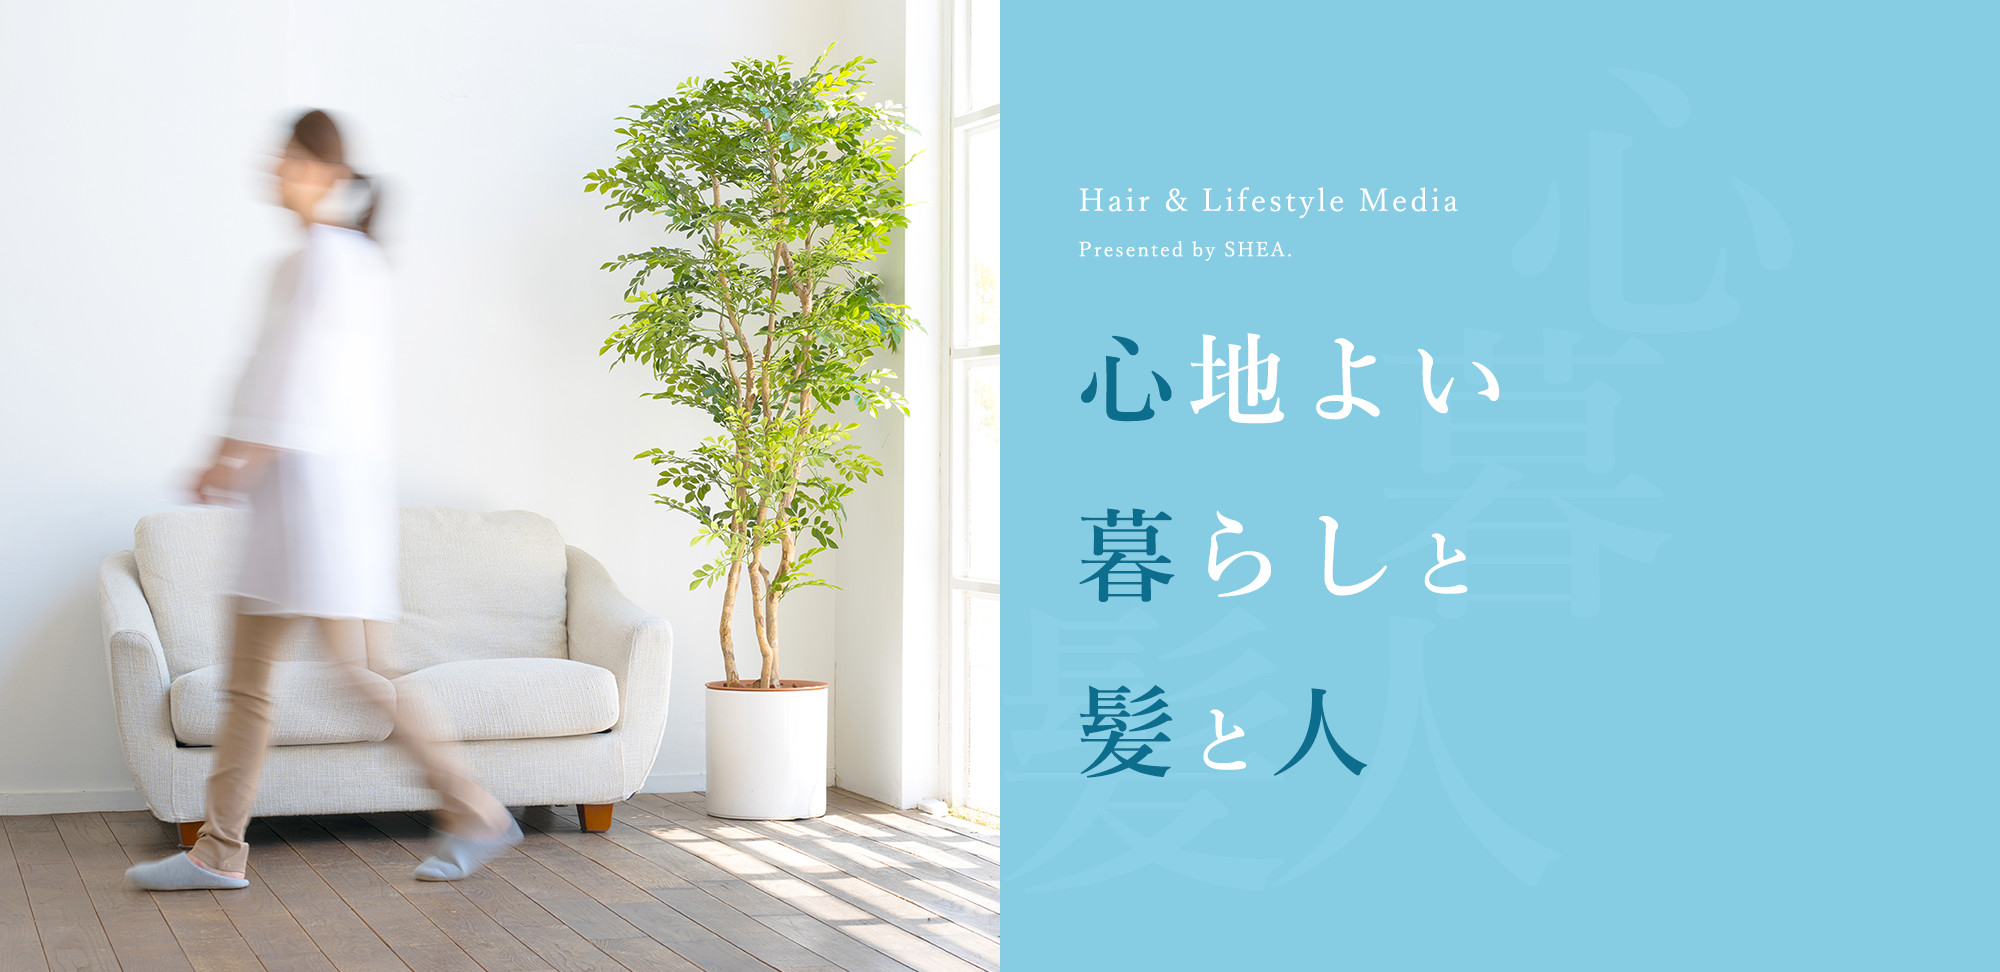 Hair & Lifestyle Media. Presented by SHEA. 心地よい暮らしと髪と人